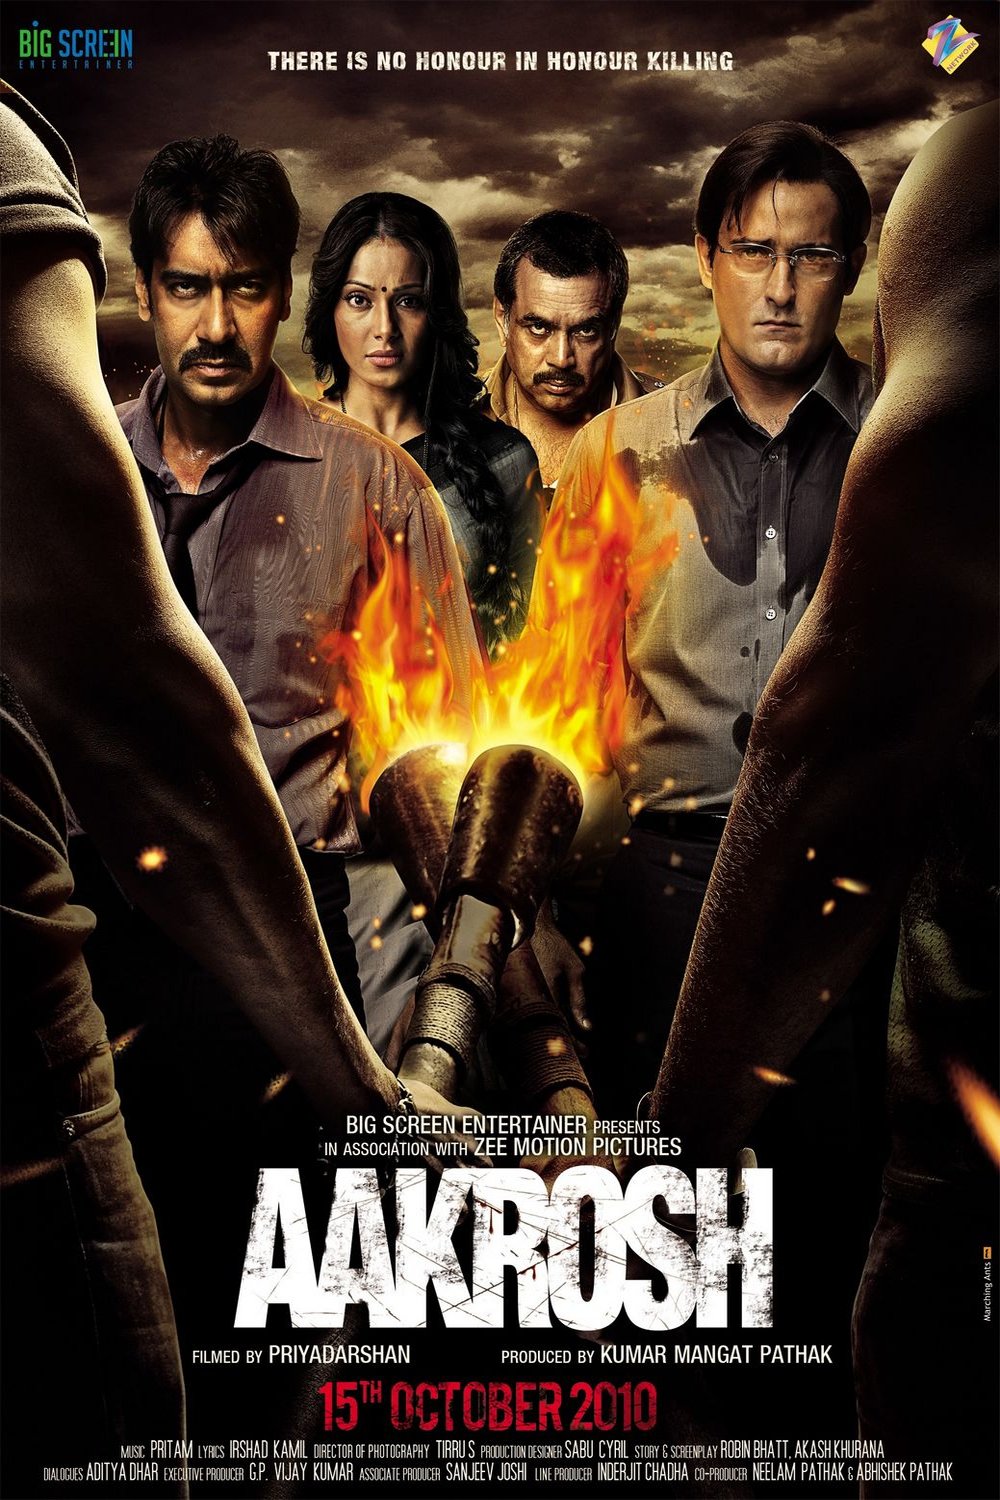 L'affiche du film Aakrosh